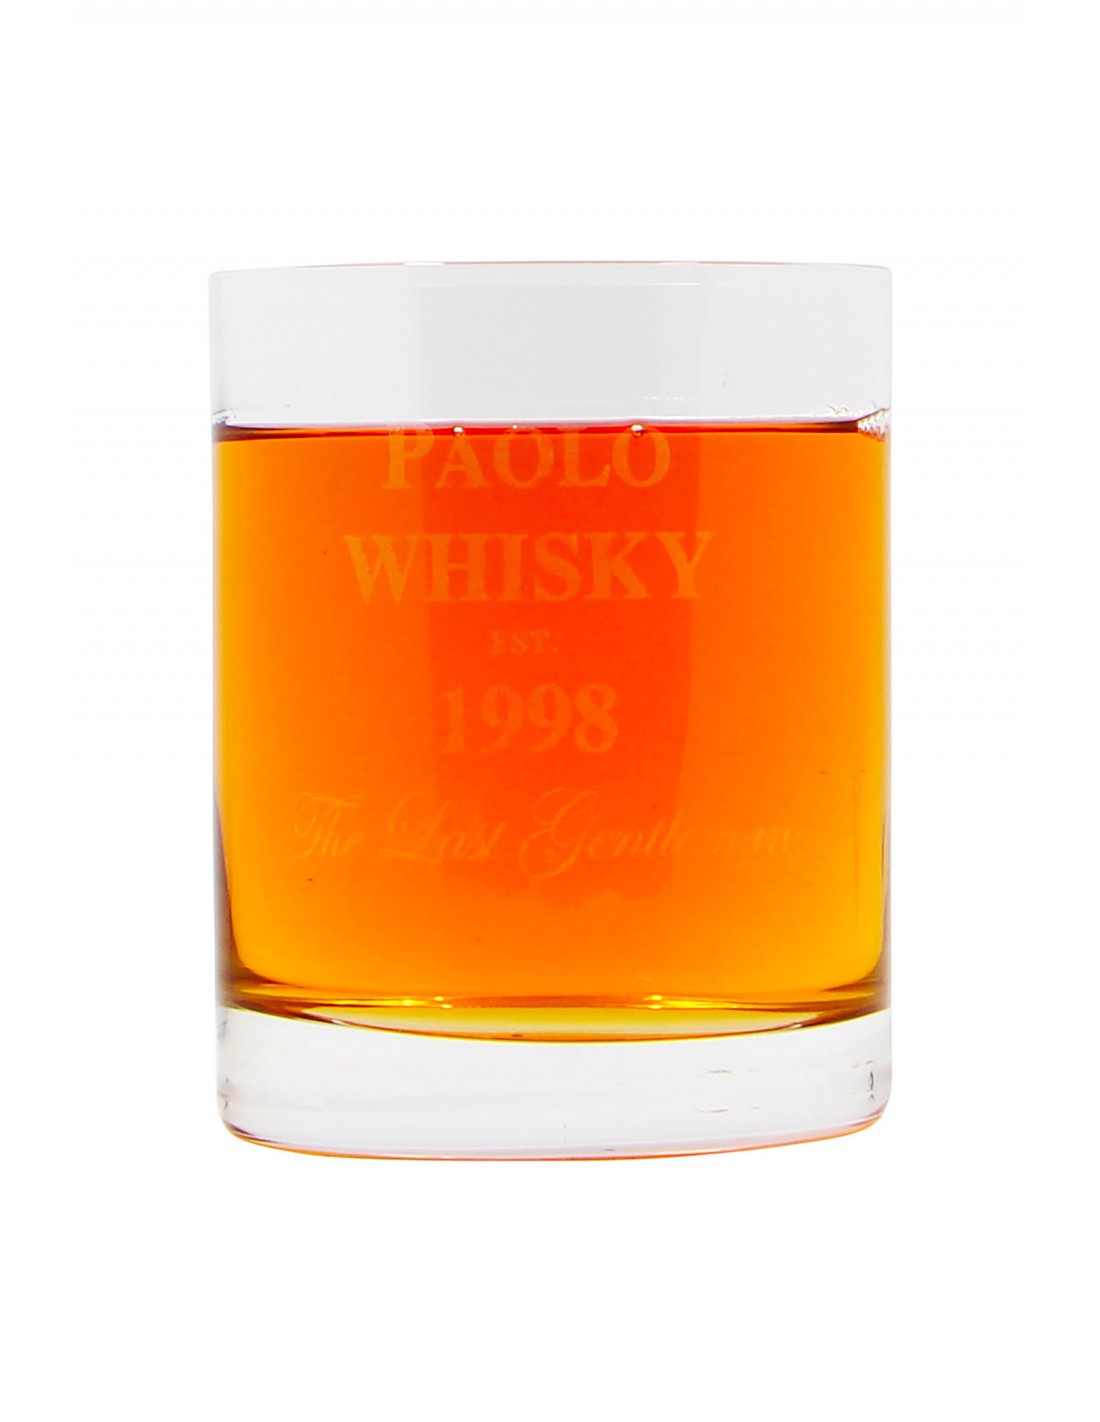 Personalised Whisky Tumbler Glass | oohwine.com